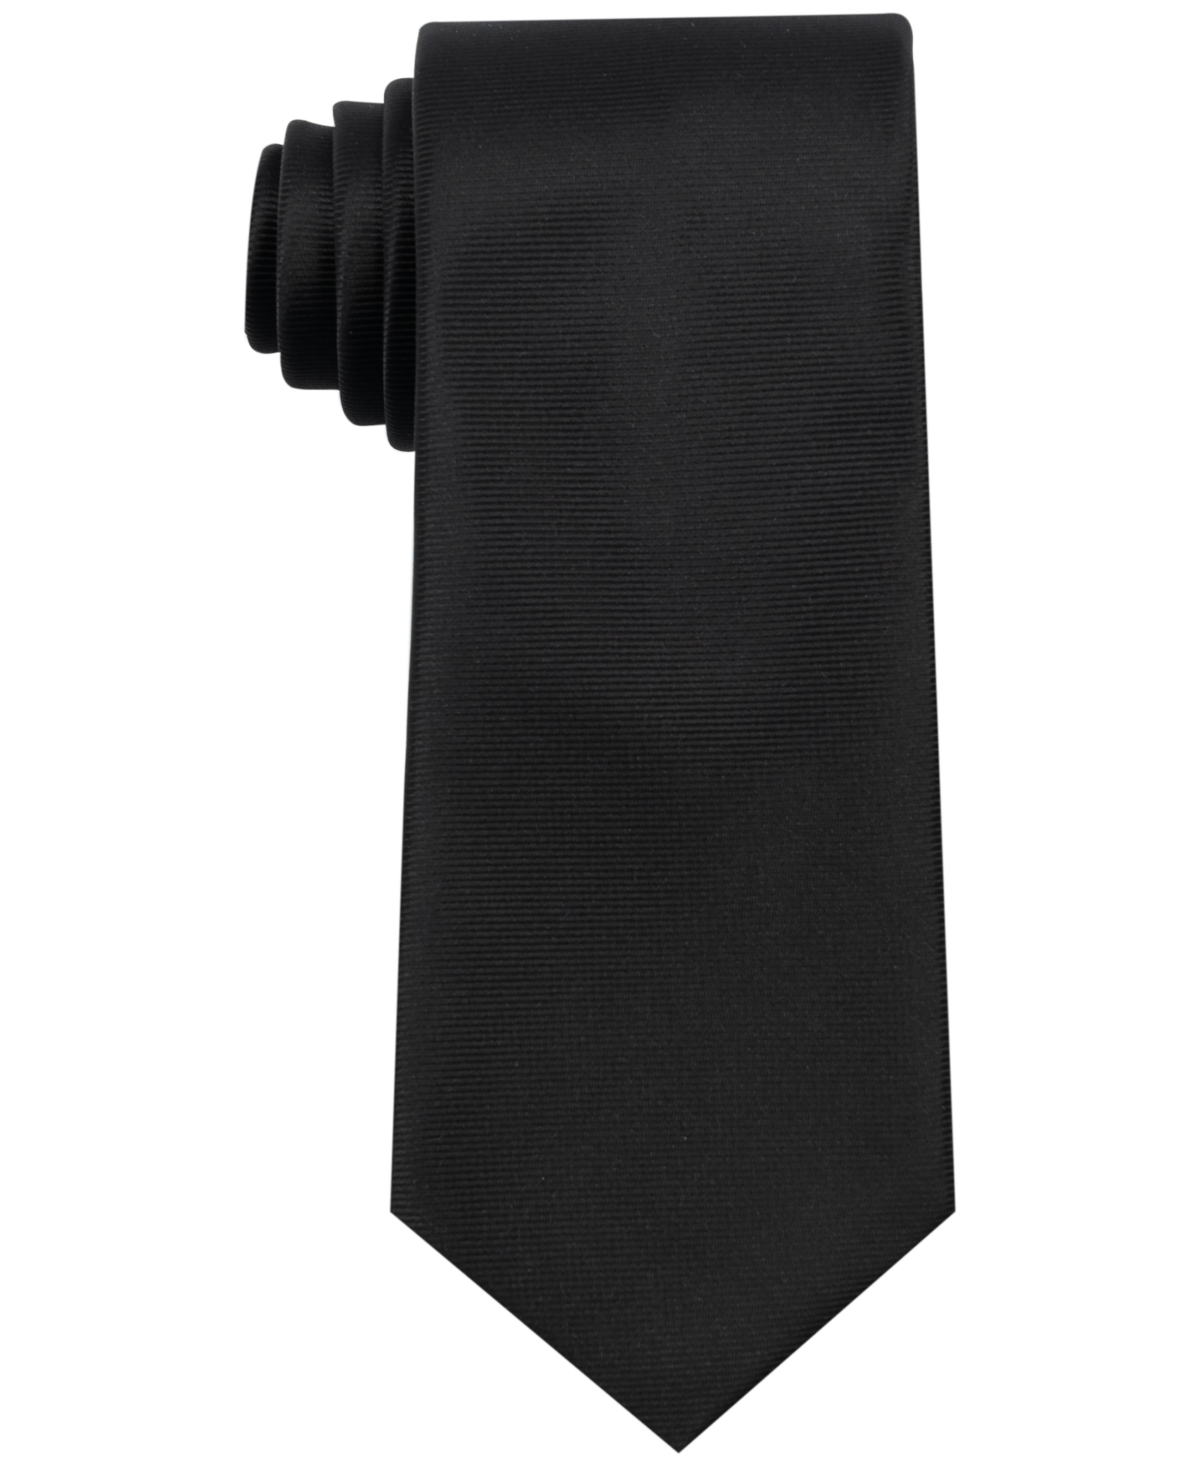 Shop Calabrum Men's Classic Extra-long Solid Black Tie